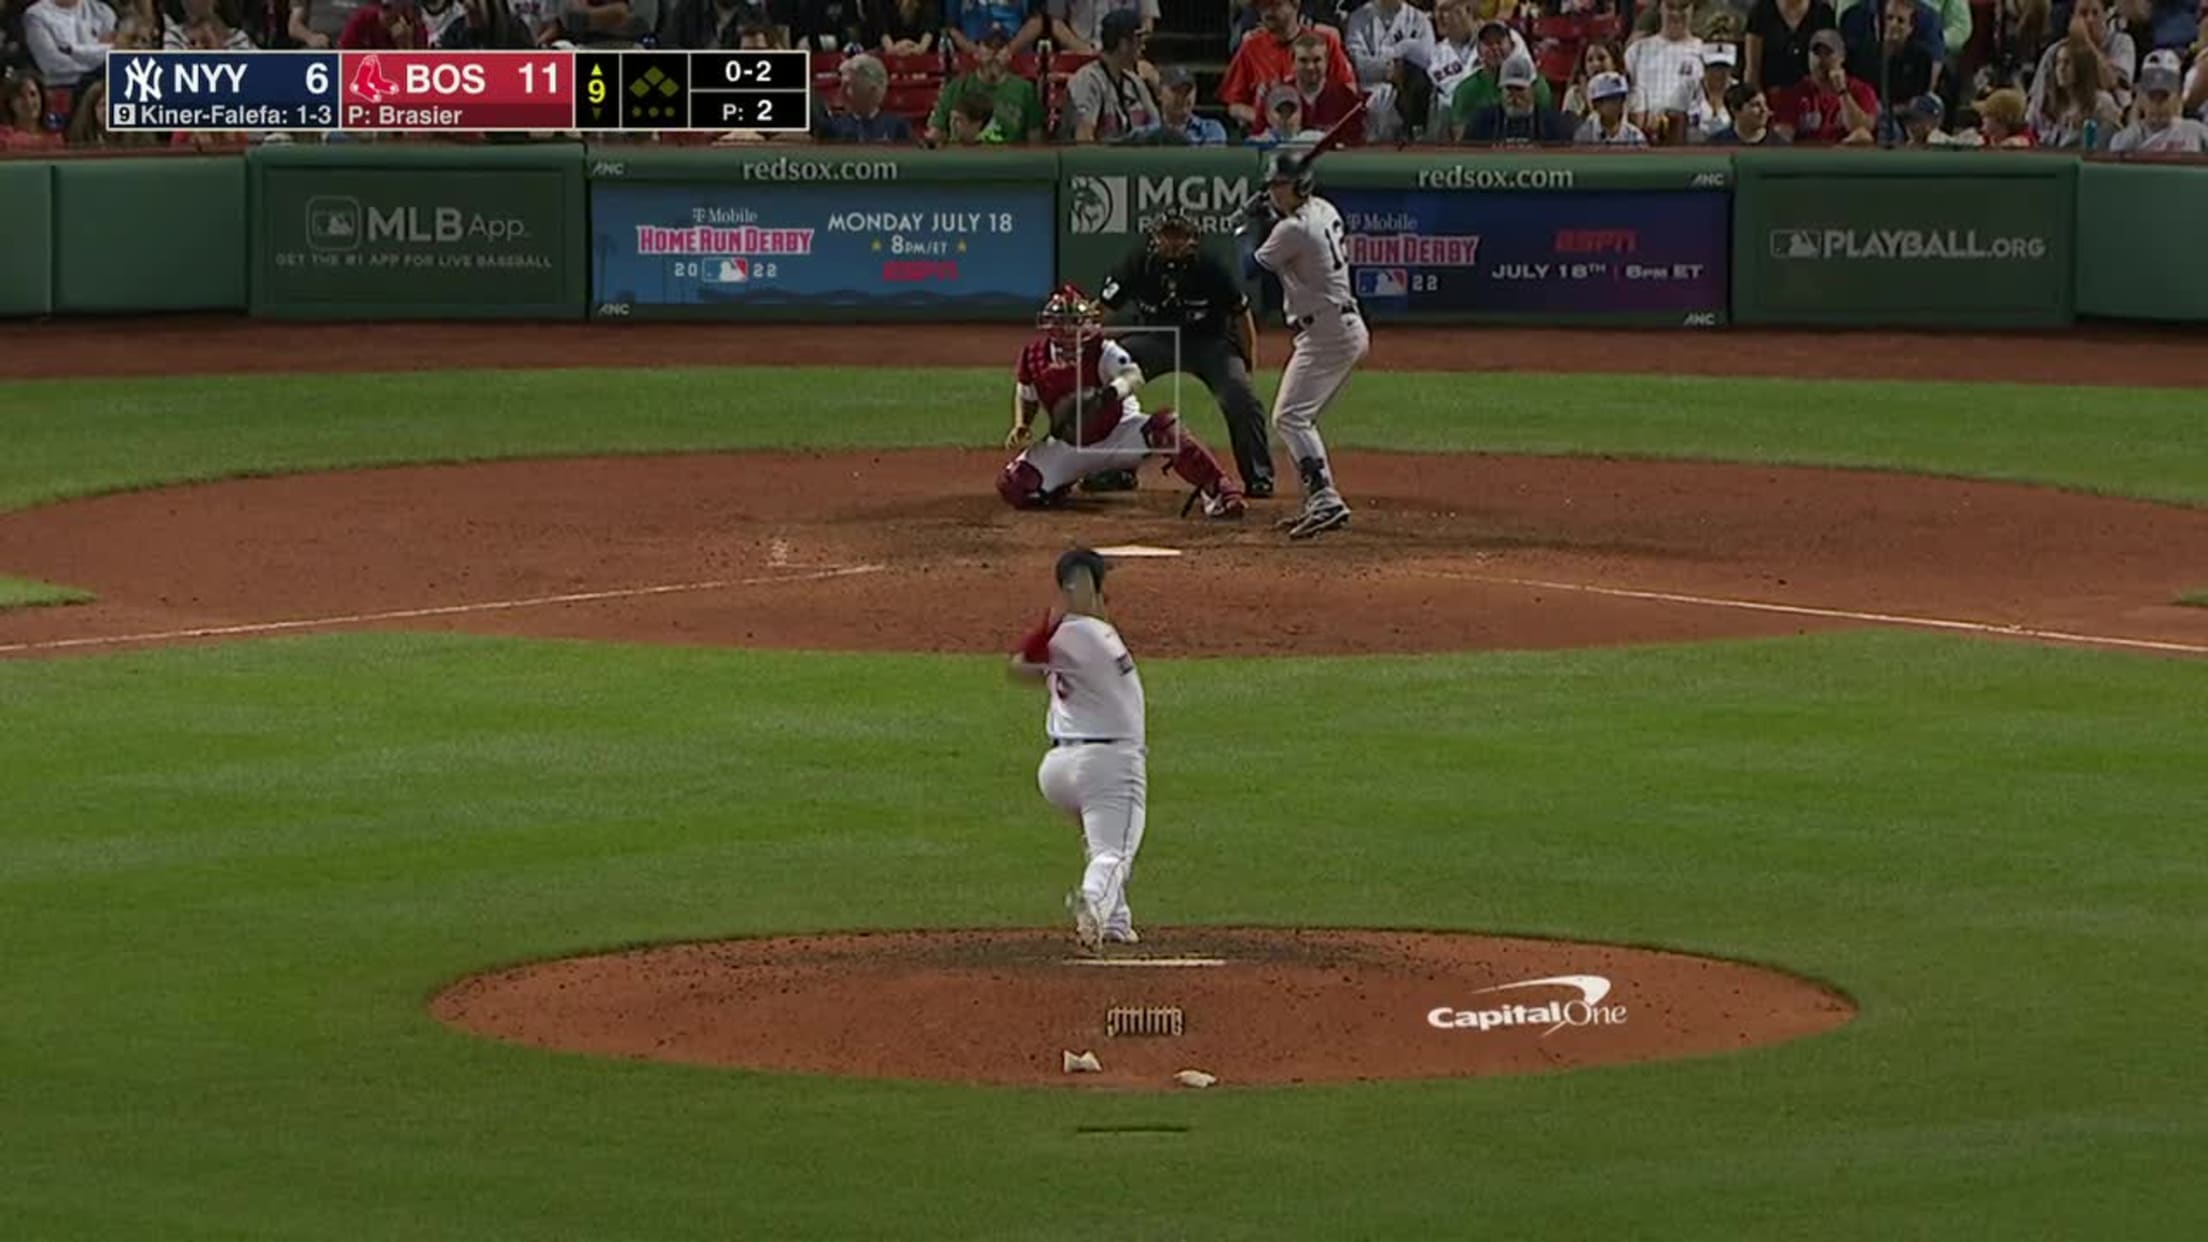 Jeter lifts Kayrod as Yanks-Sox scores again - Sports Media Watch